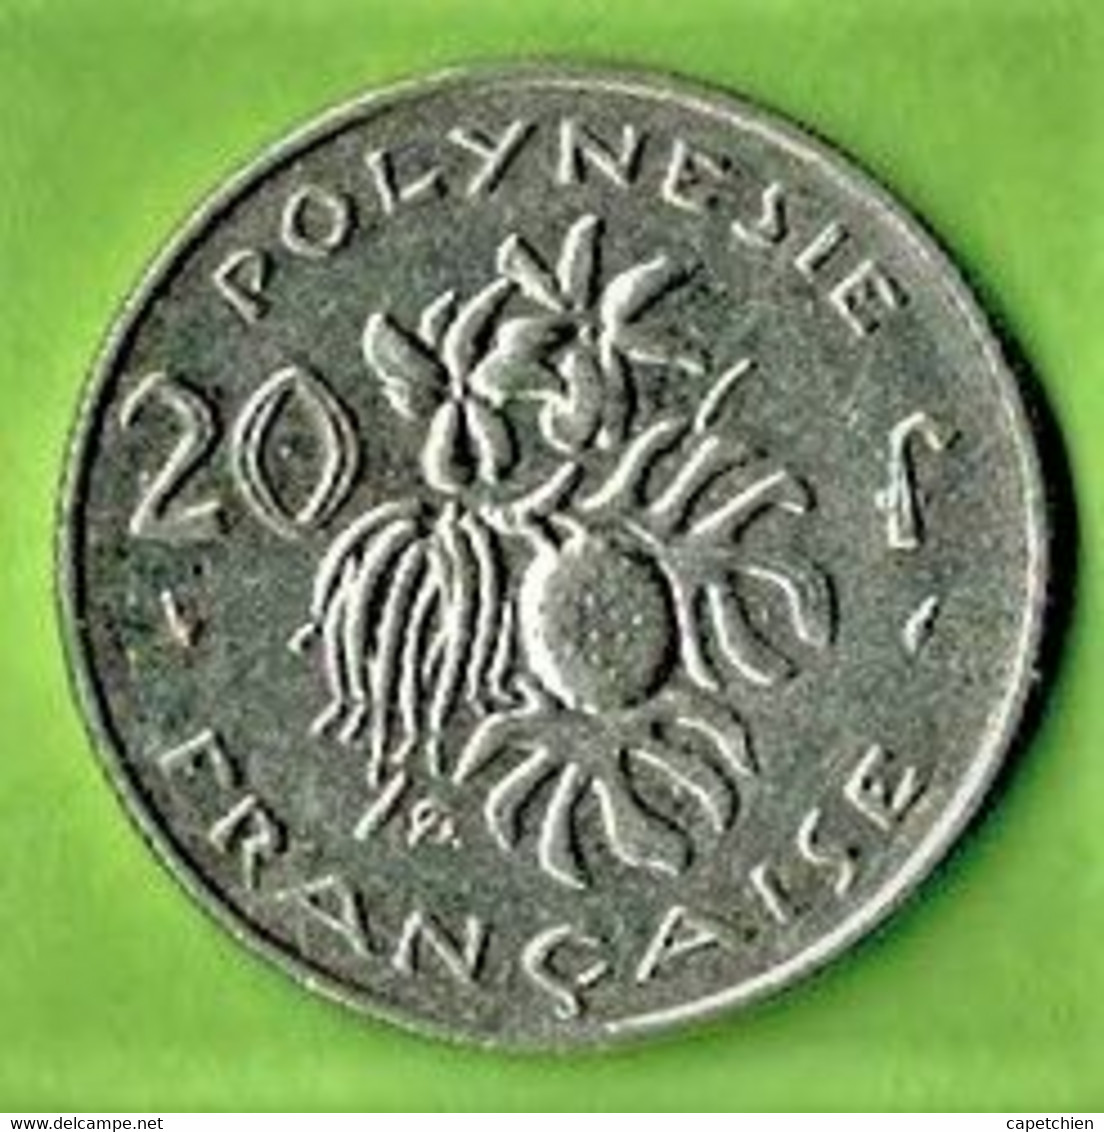 POLYNESIE FRANCAISE / 20 FRANCS / 1983 / - Comores